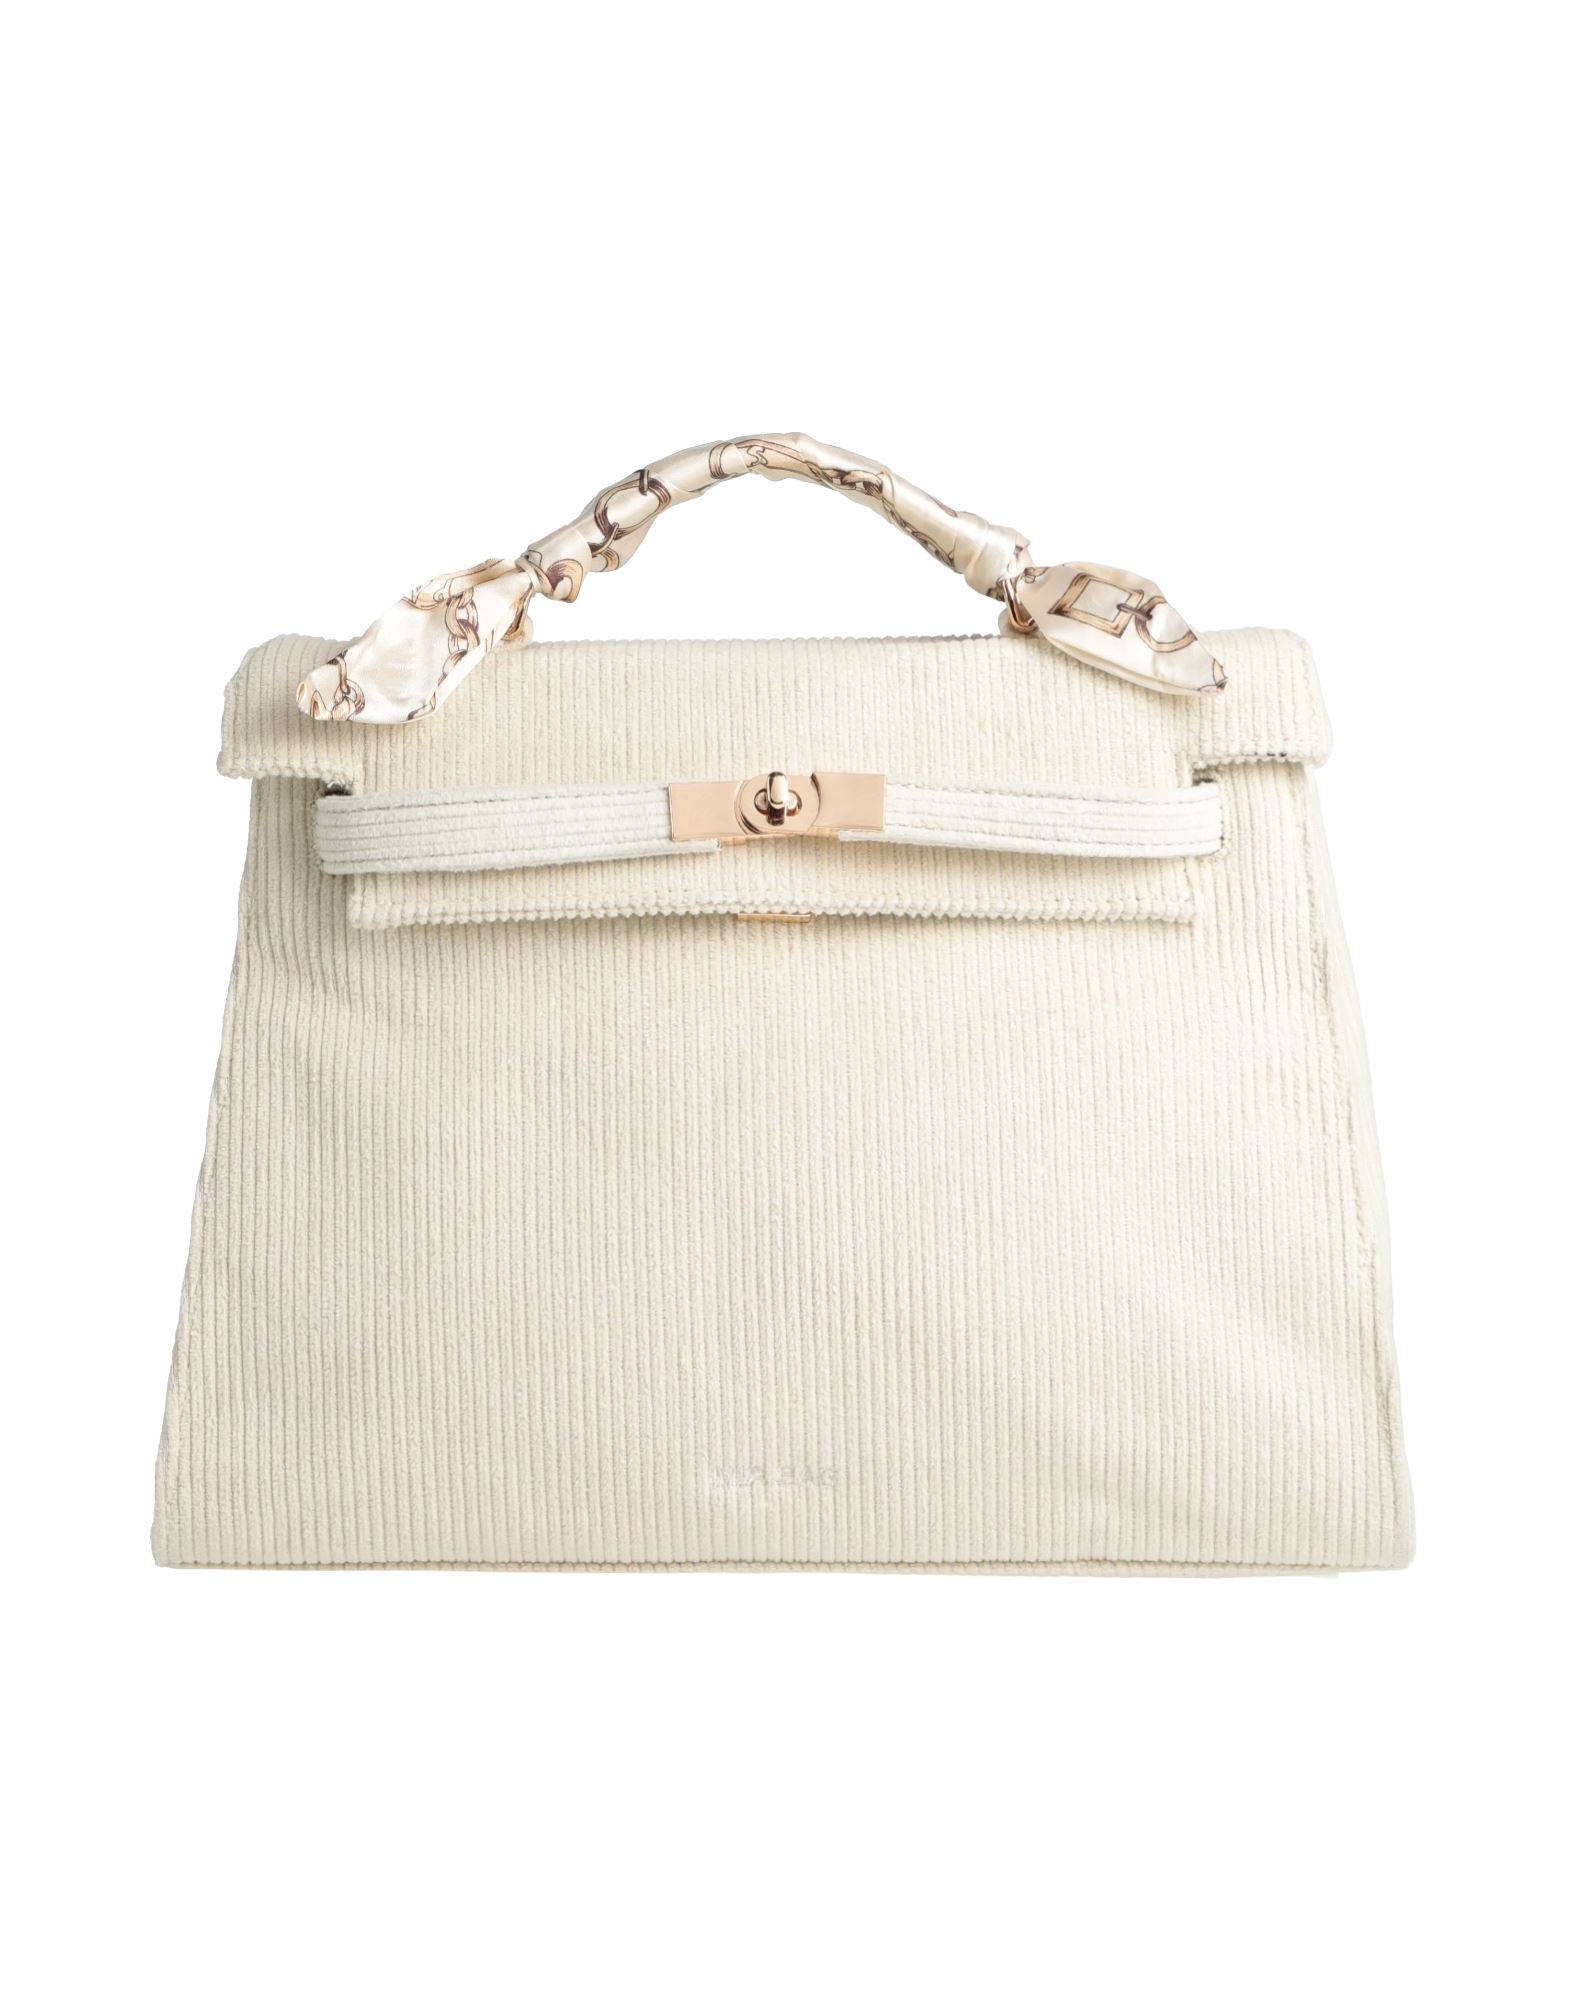 Mia Bag Handbags In Ivory